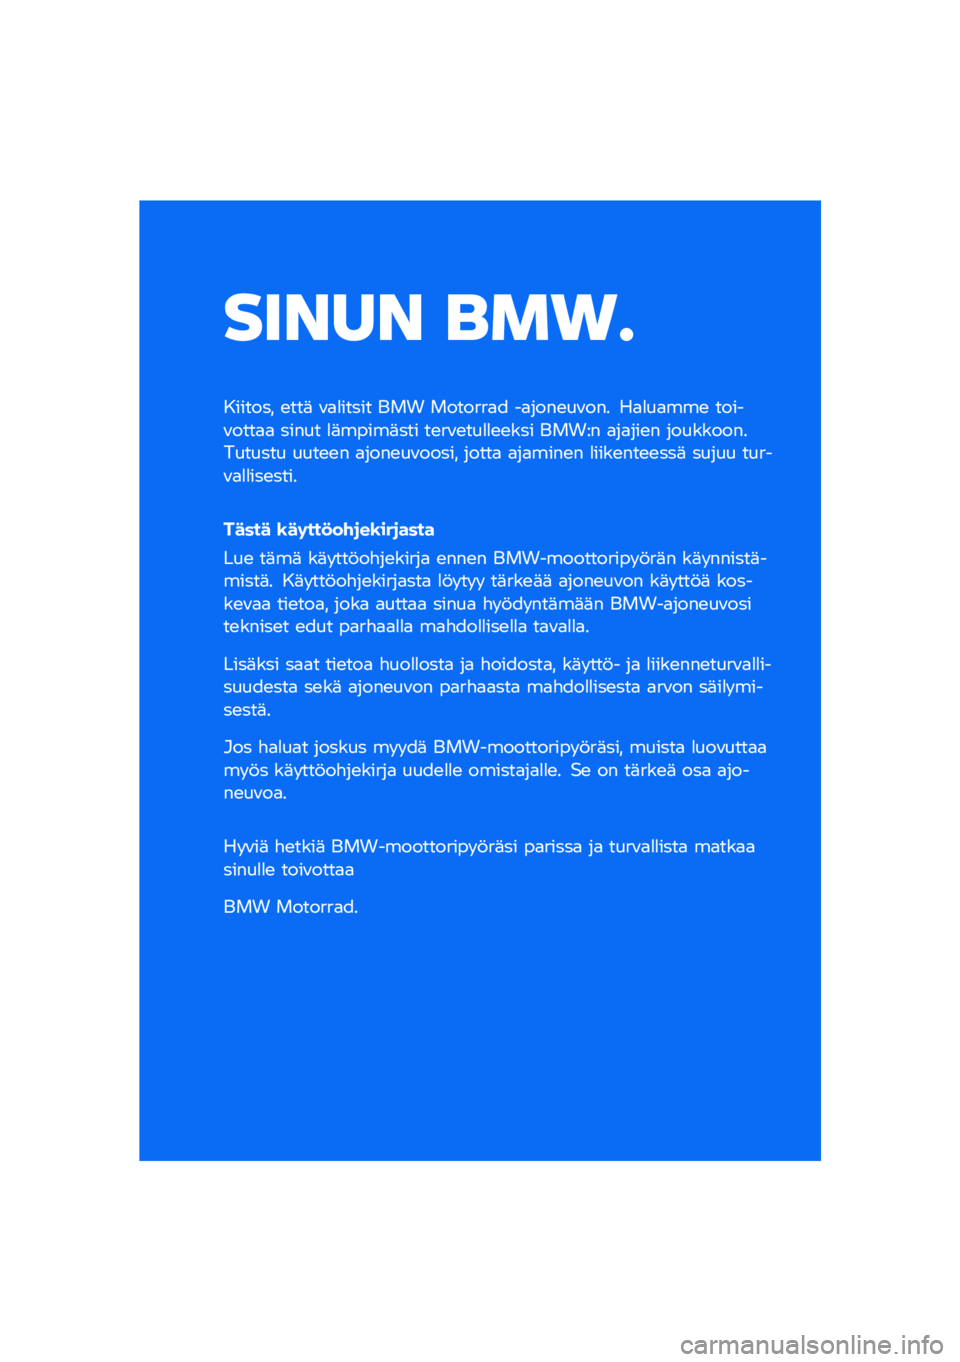 BMW MOTORRAD C 400 X 2020  Käsikirja (in Finnish) ����� ���\b�	
������� �\b���	 �\f�
�
����� ��� �������
� ��
����\b��\f��� ��
�
��
���\b �����\f����
�
 ����� �
�	�����	��� ��\b��\f�\b�